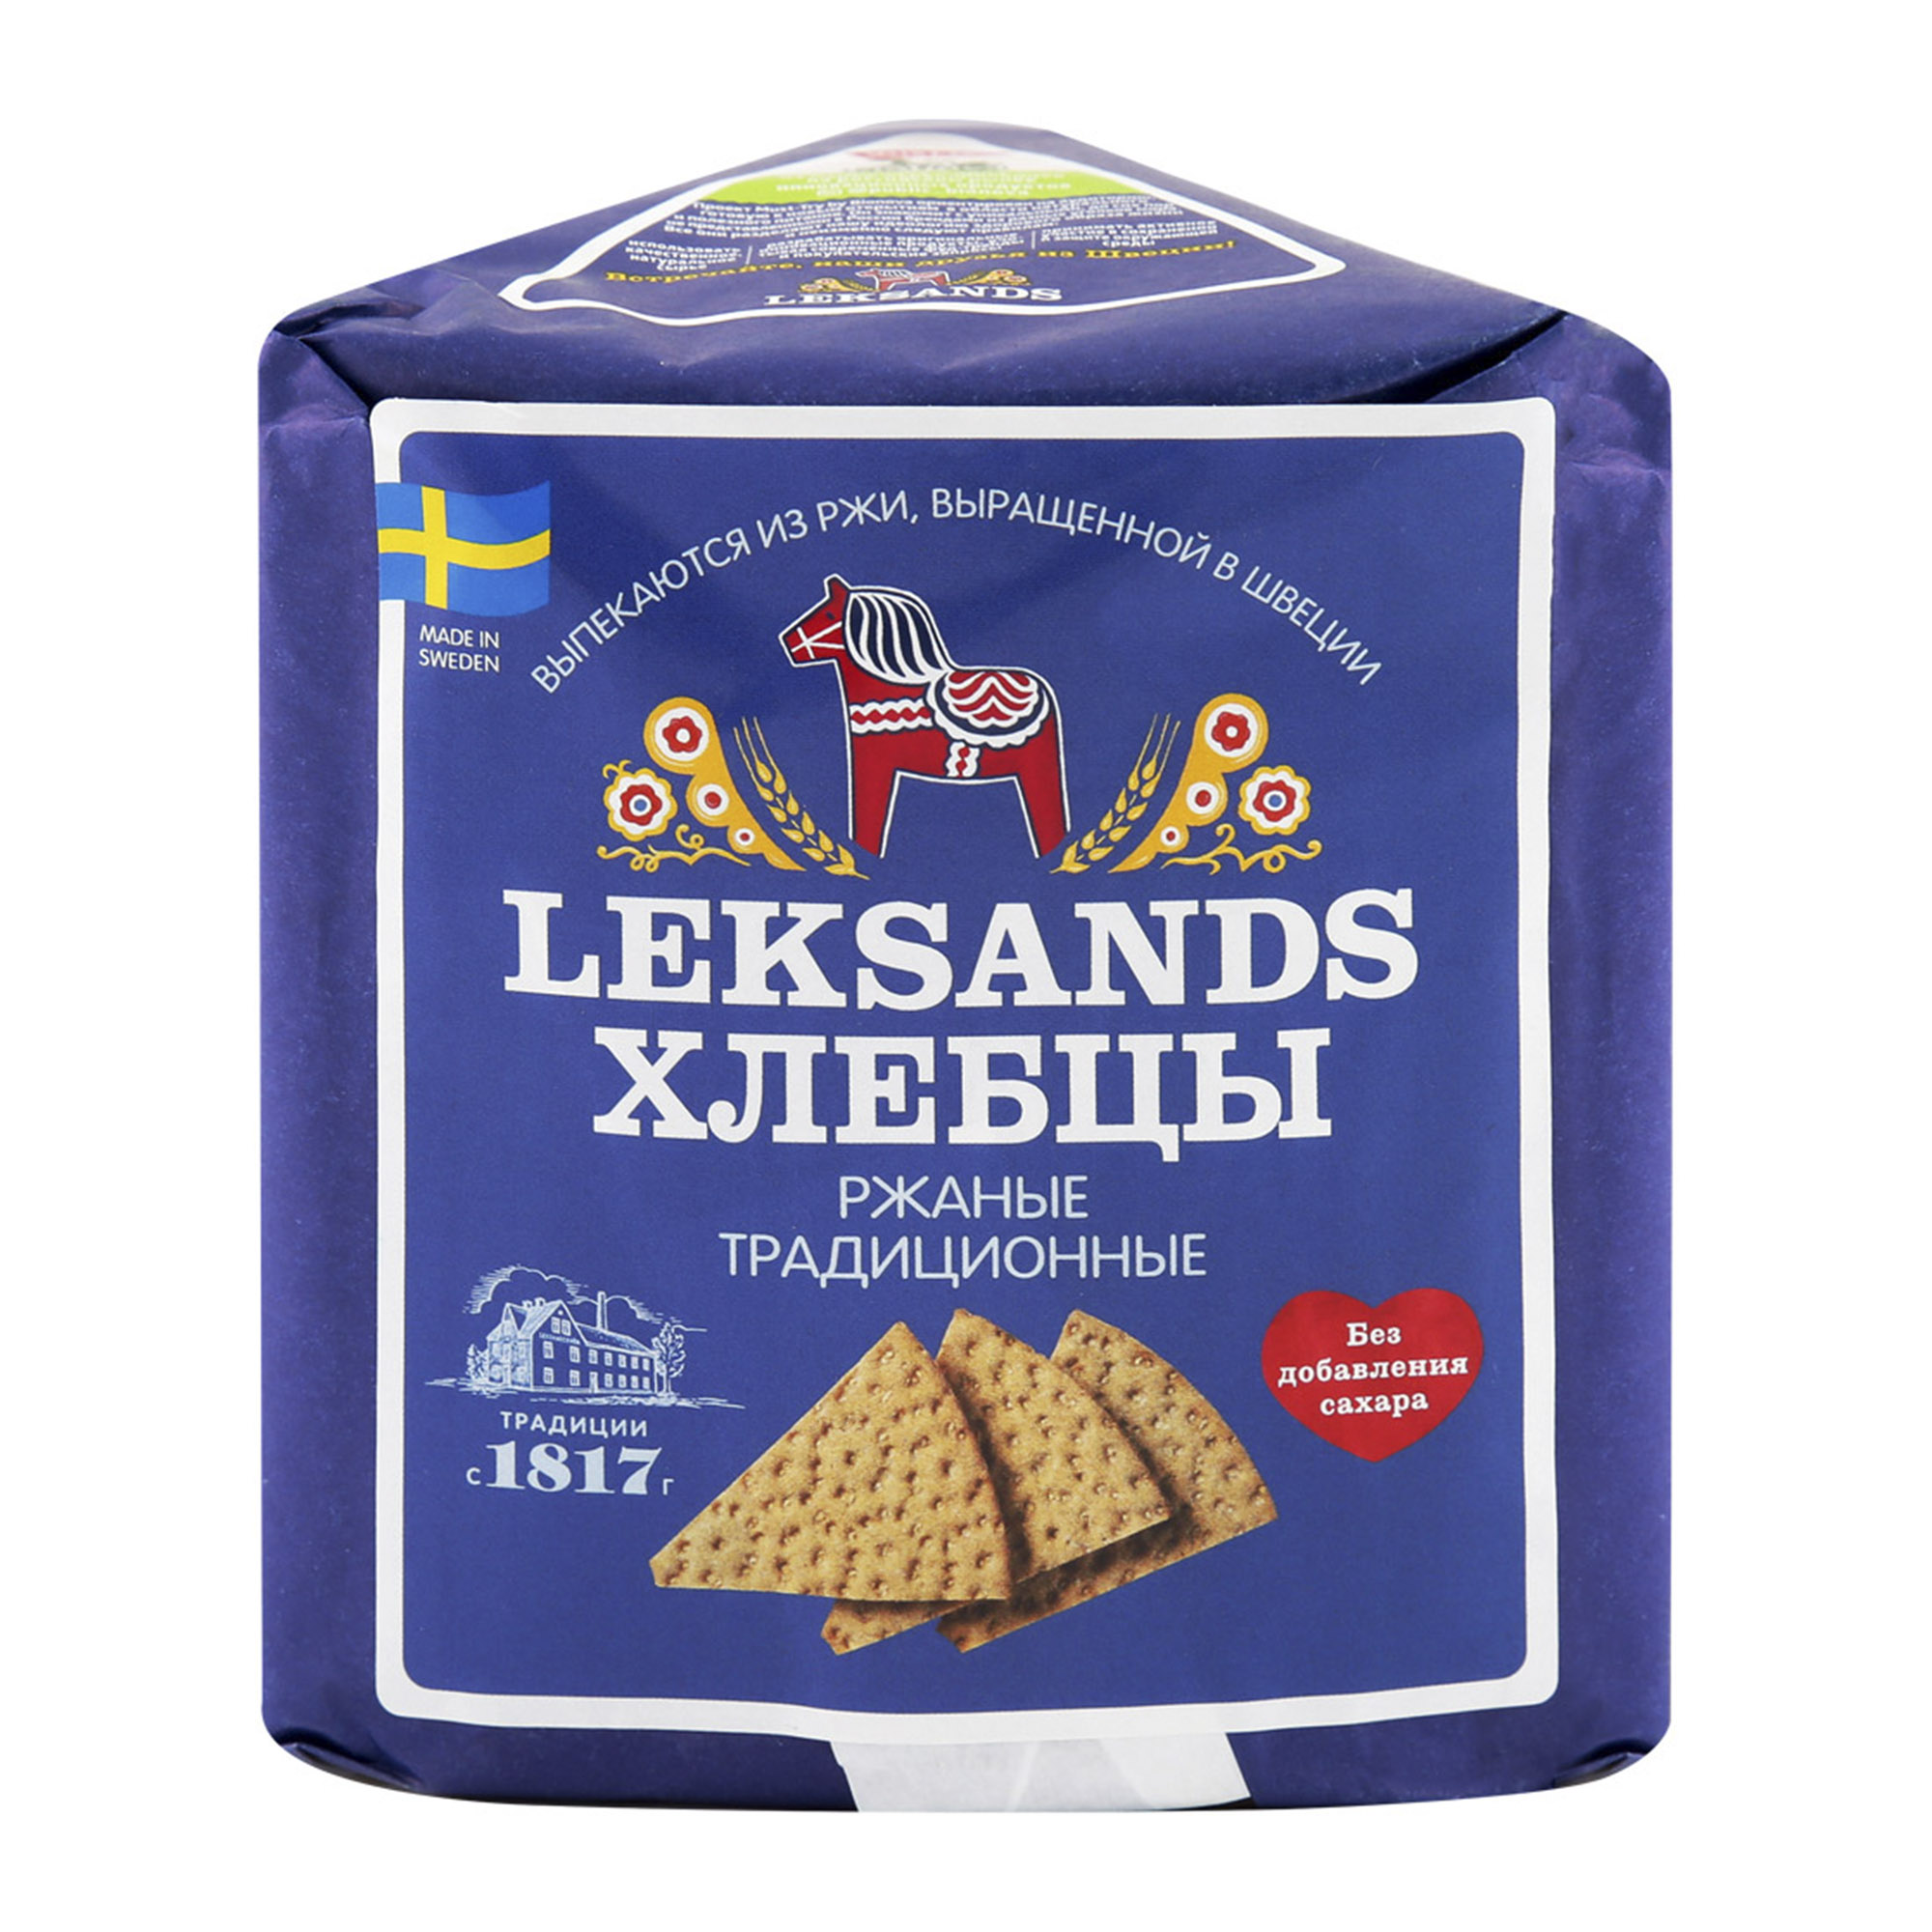 Хлебцы Leksands Ржаные традиционные 200 г